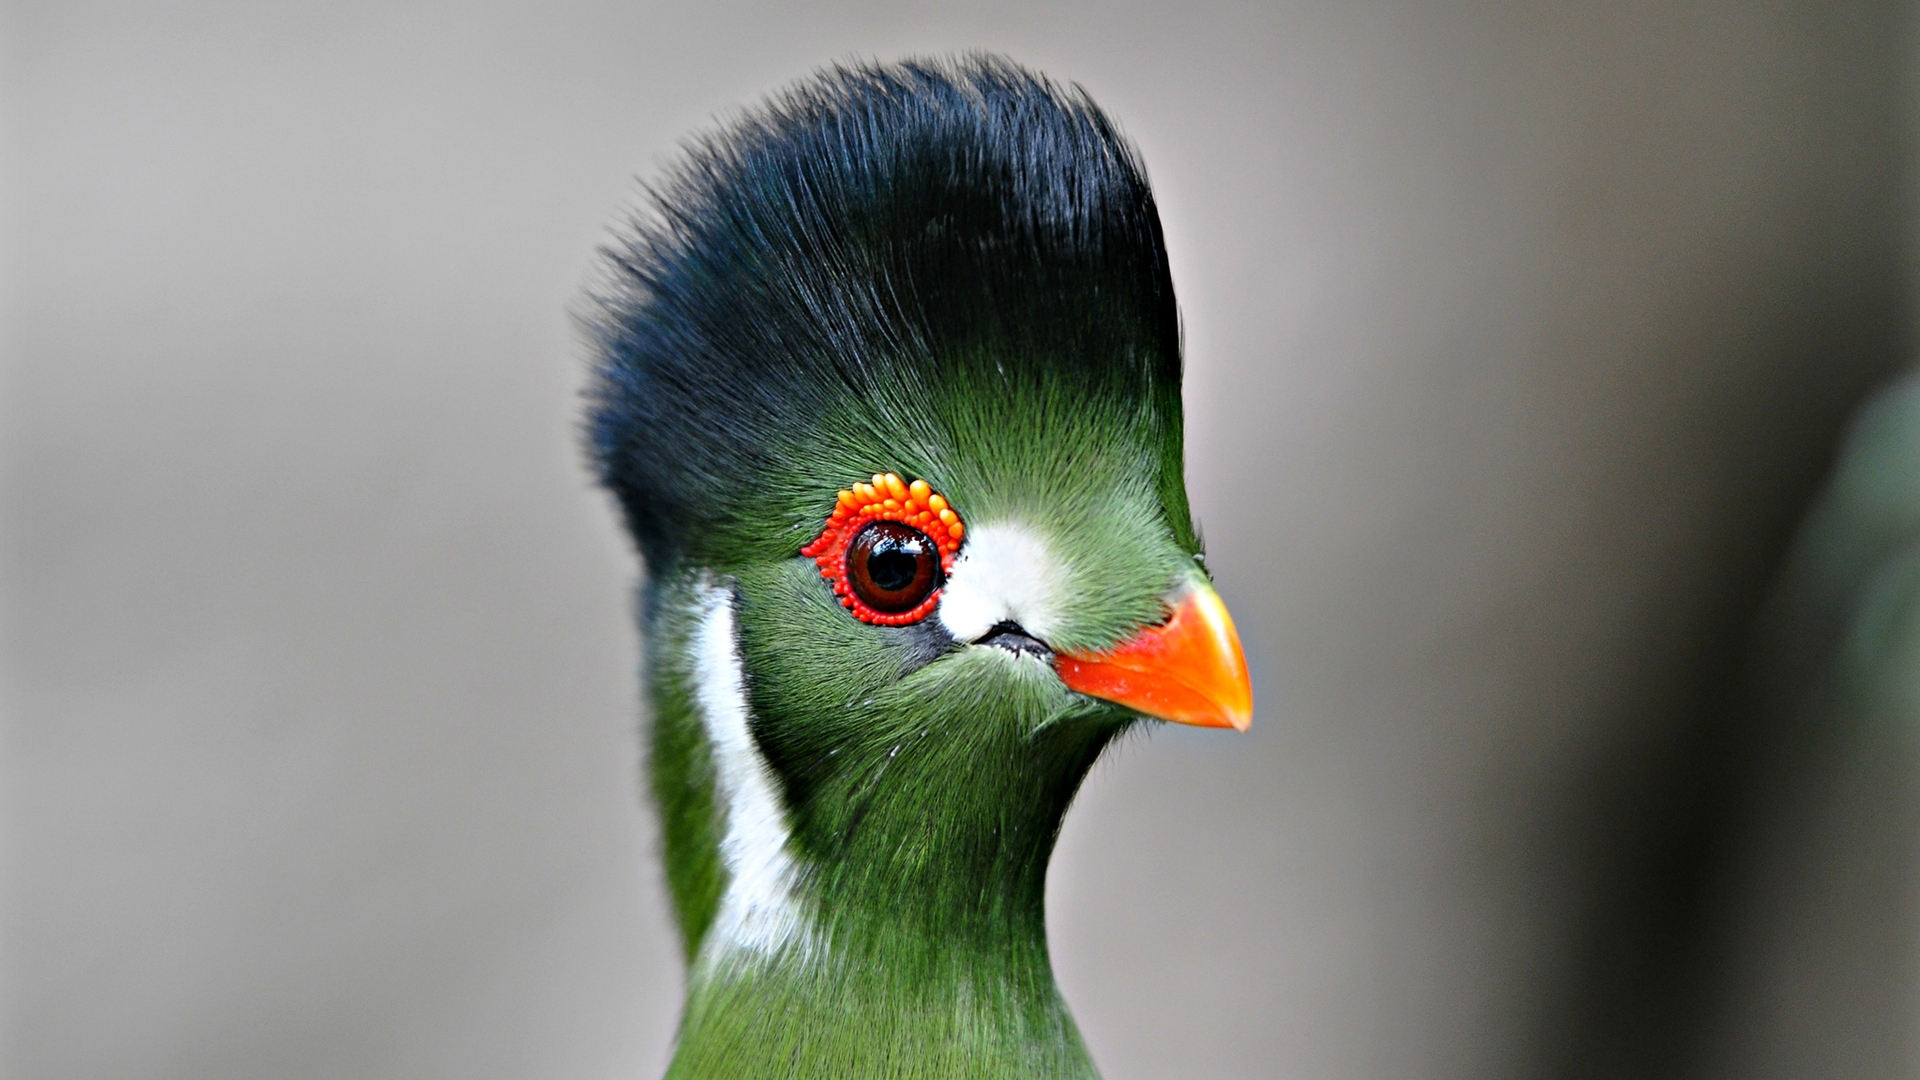 Green Bird Close Up for 1920 x 1080 HDTV 1080p resolution